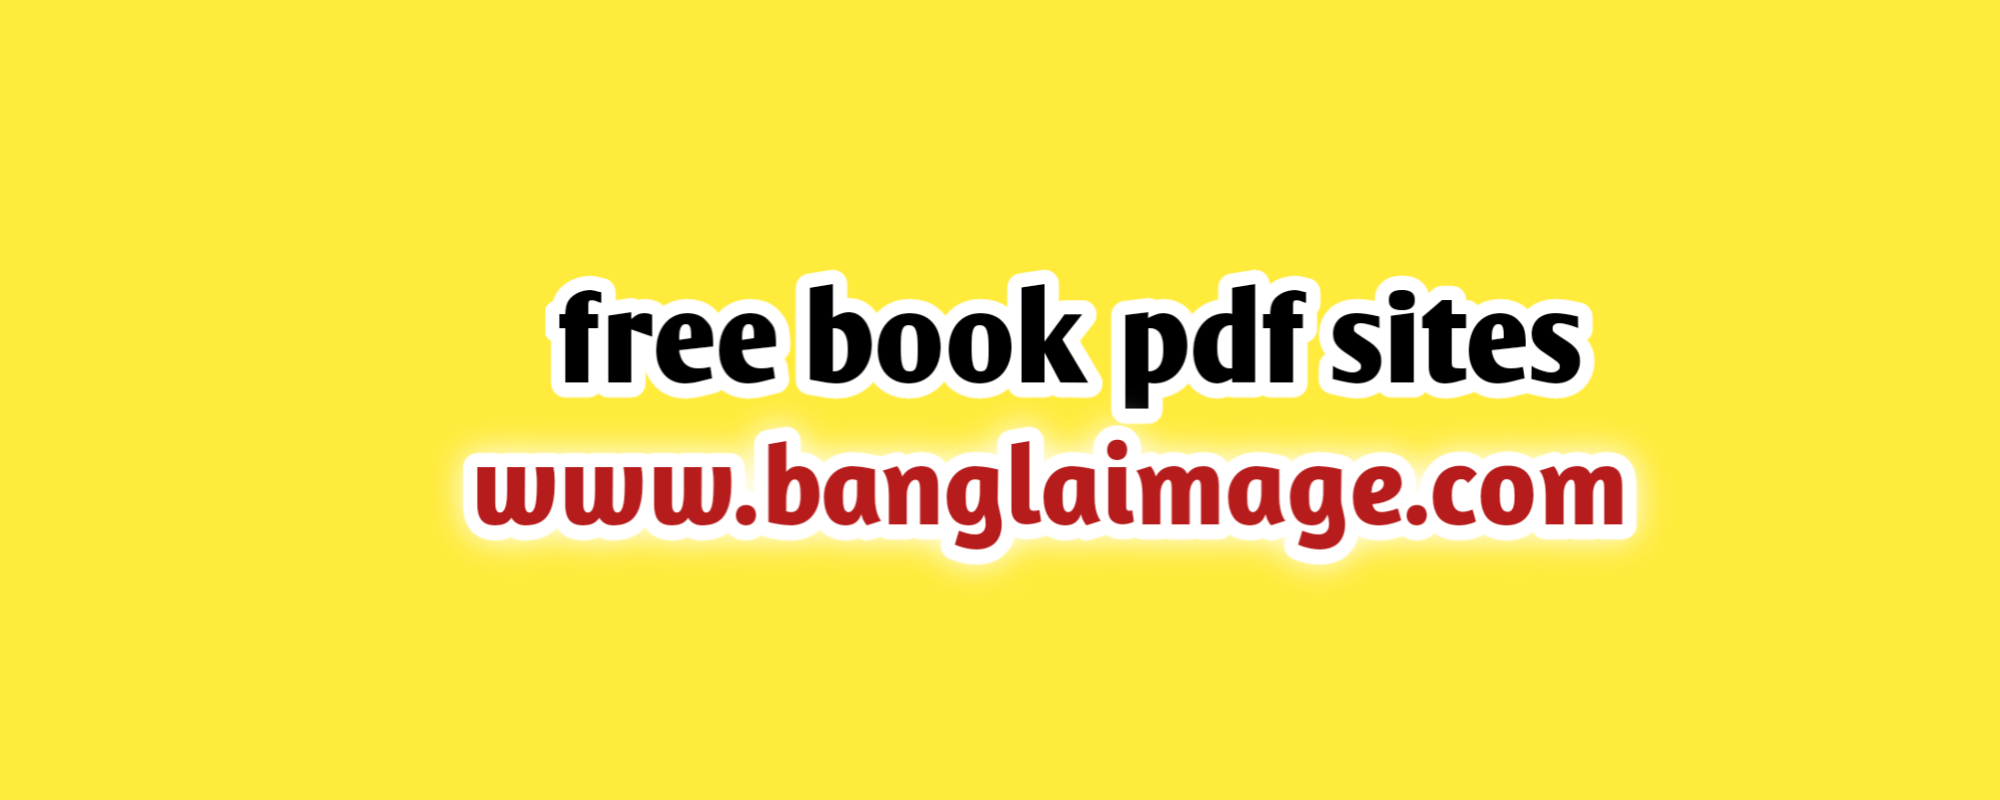 free book pdf sites, free book pdf sites drive file updated, free book pdf sites download, the free book pdf sites drive file updated